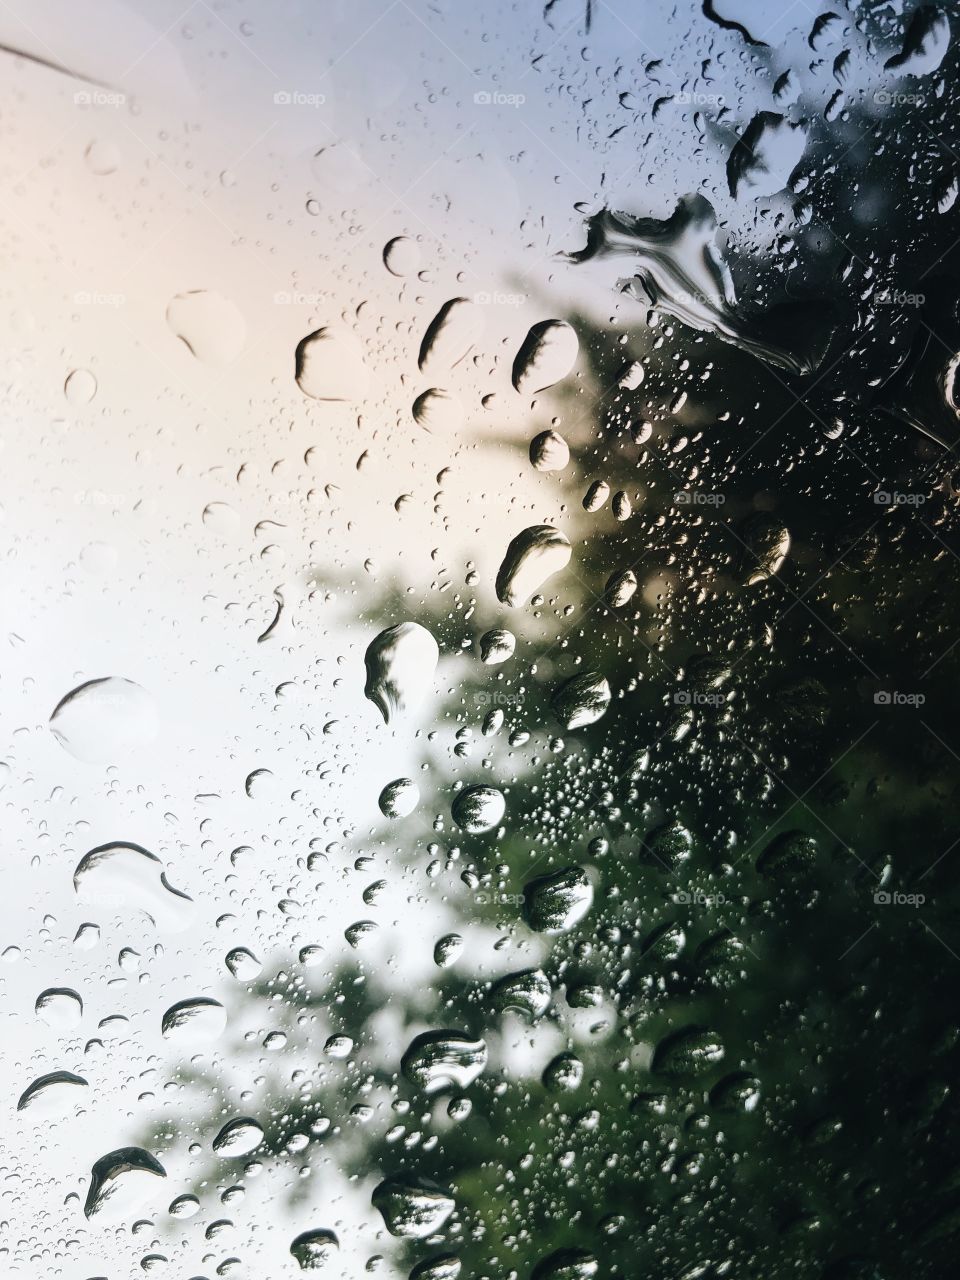 Drop, Wet, Rain, Bubble, Splash